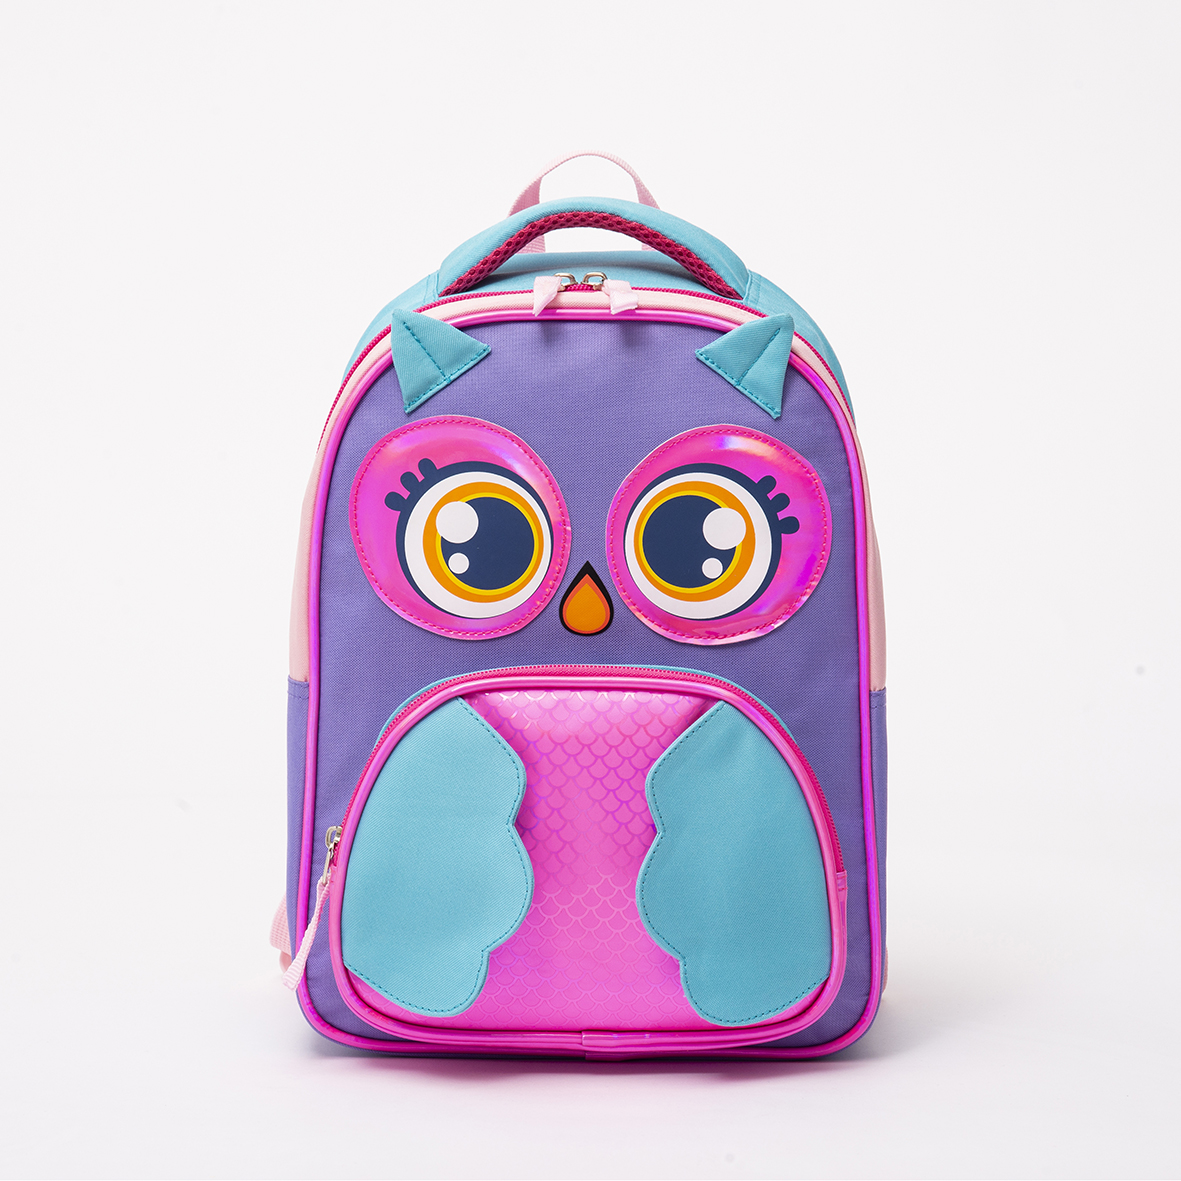 100% Original Sequin Backpack For Kids – New design cute stereoscopic purple owl kids bag – Twinkling Star